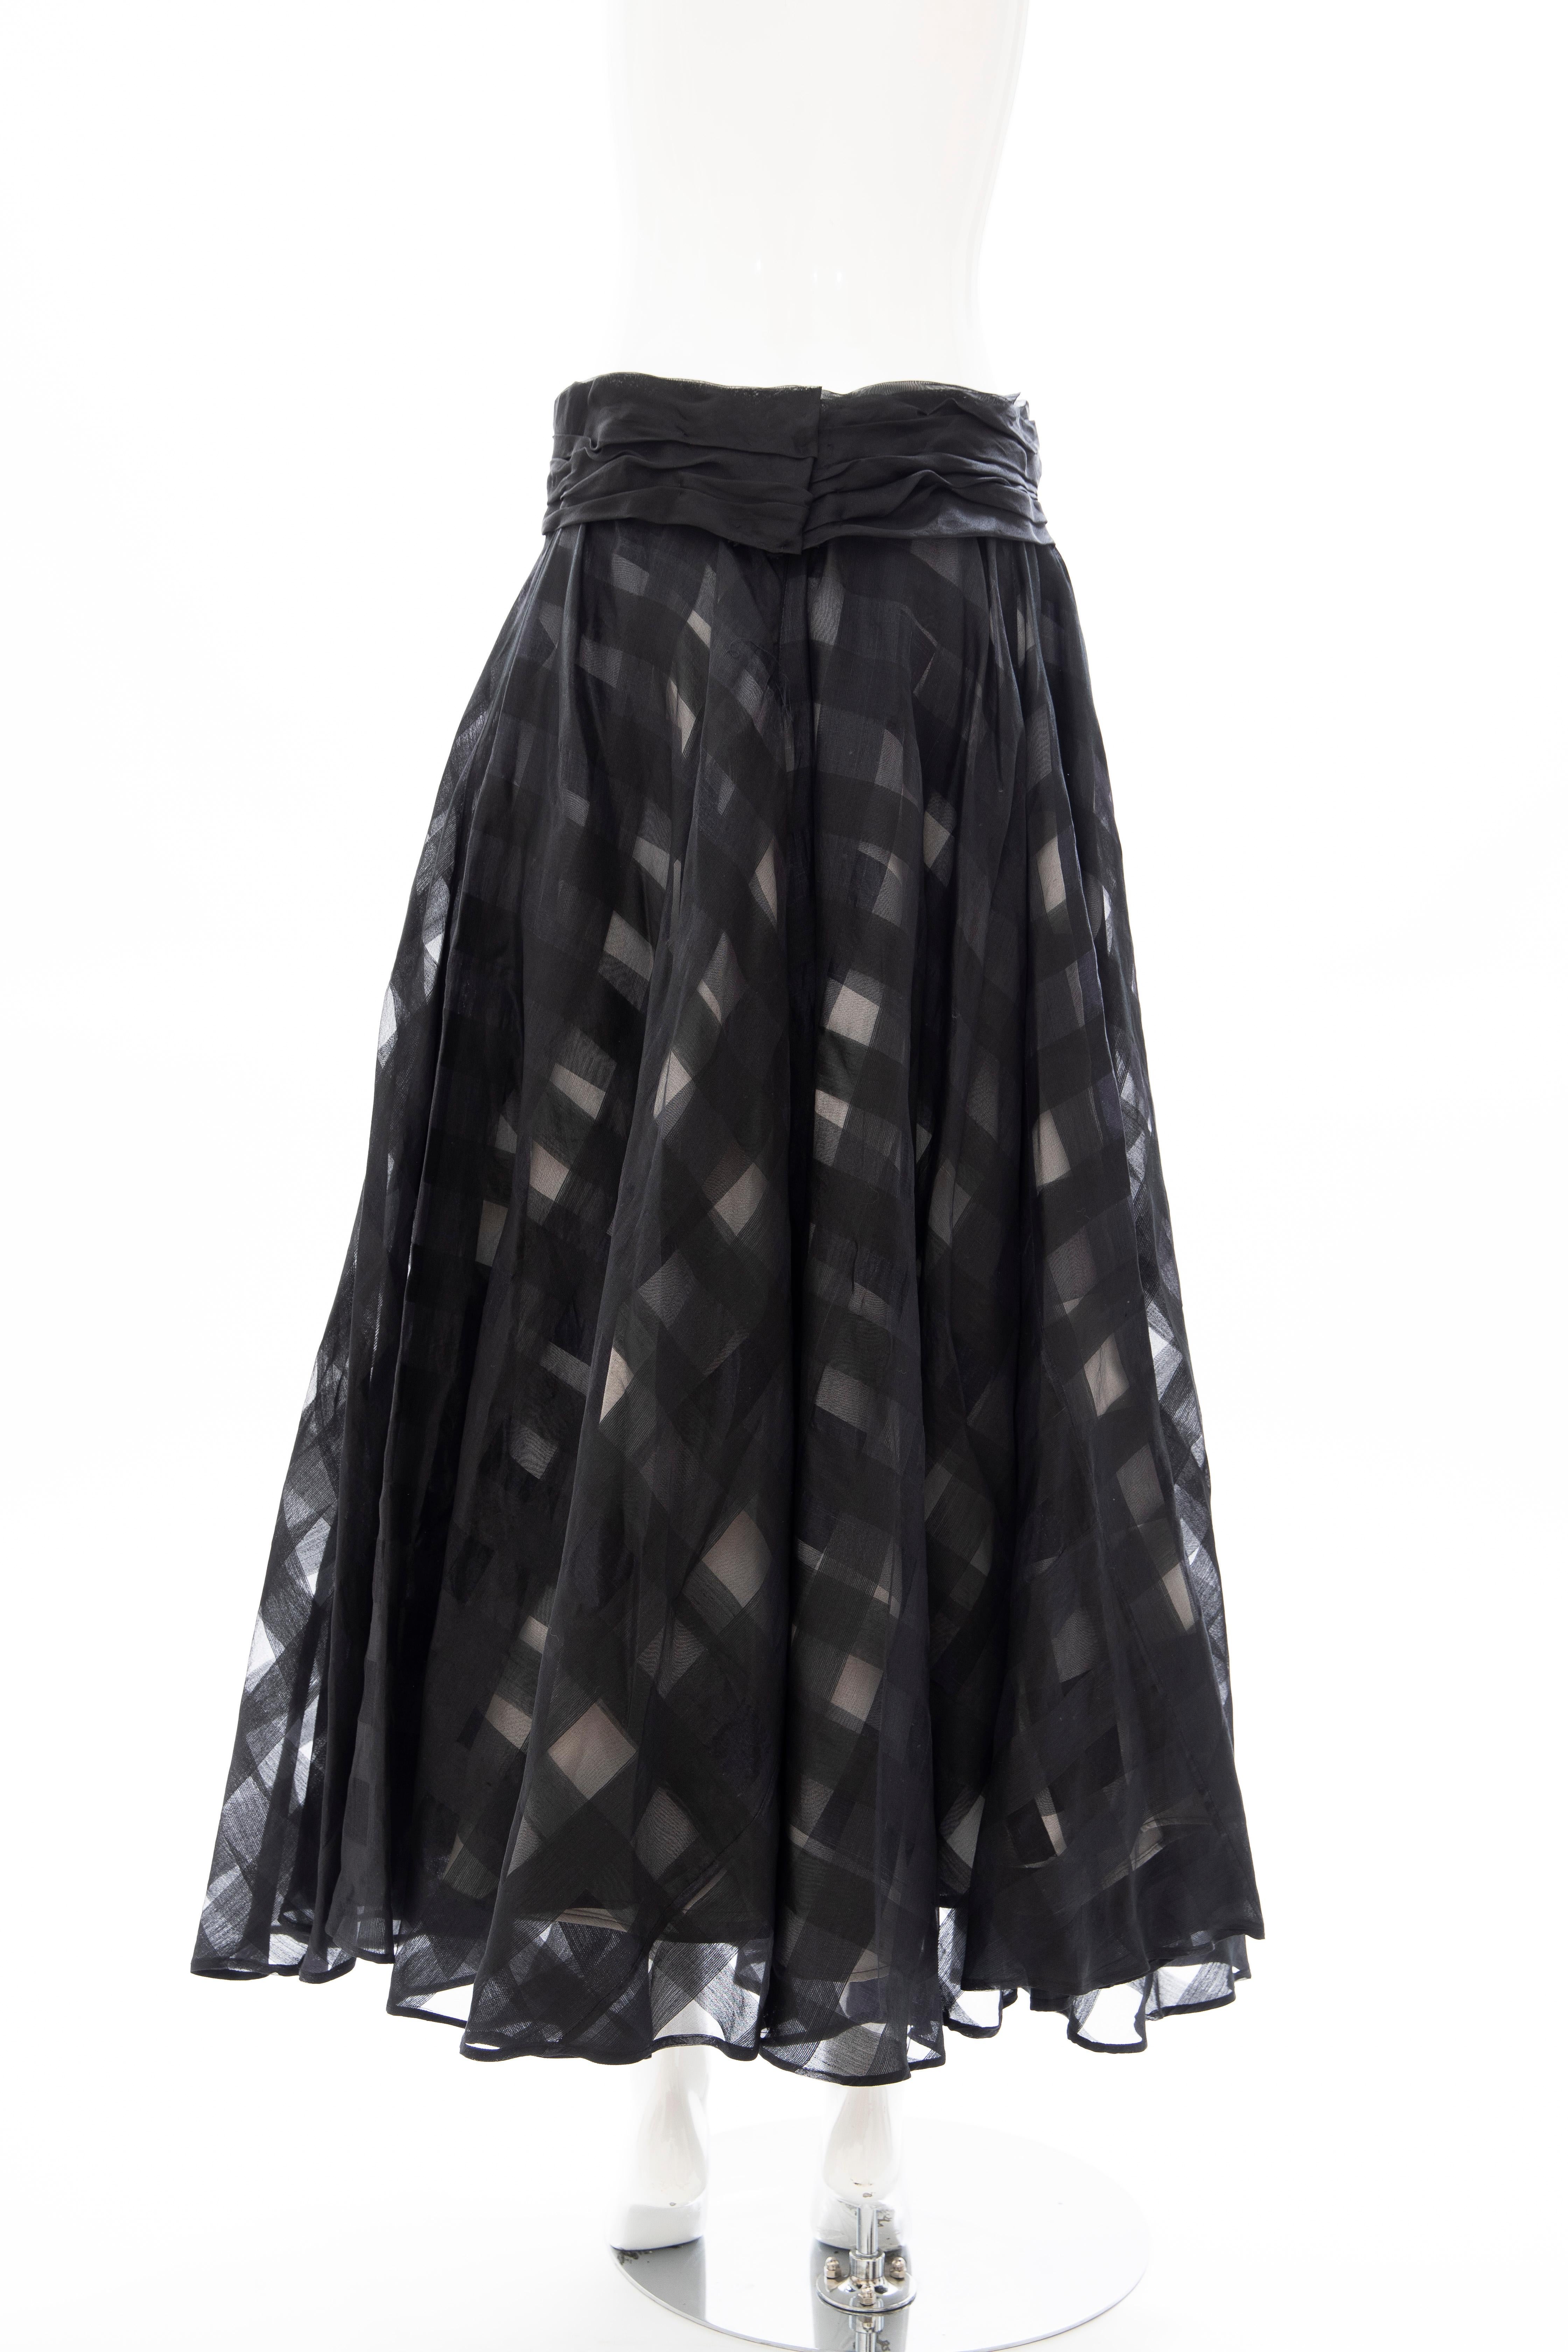 Olivier Theyskens Runway Black Silk Checkerboard Pattern Skirt, Spring 2000 For Sale 6